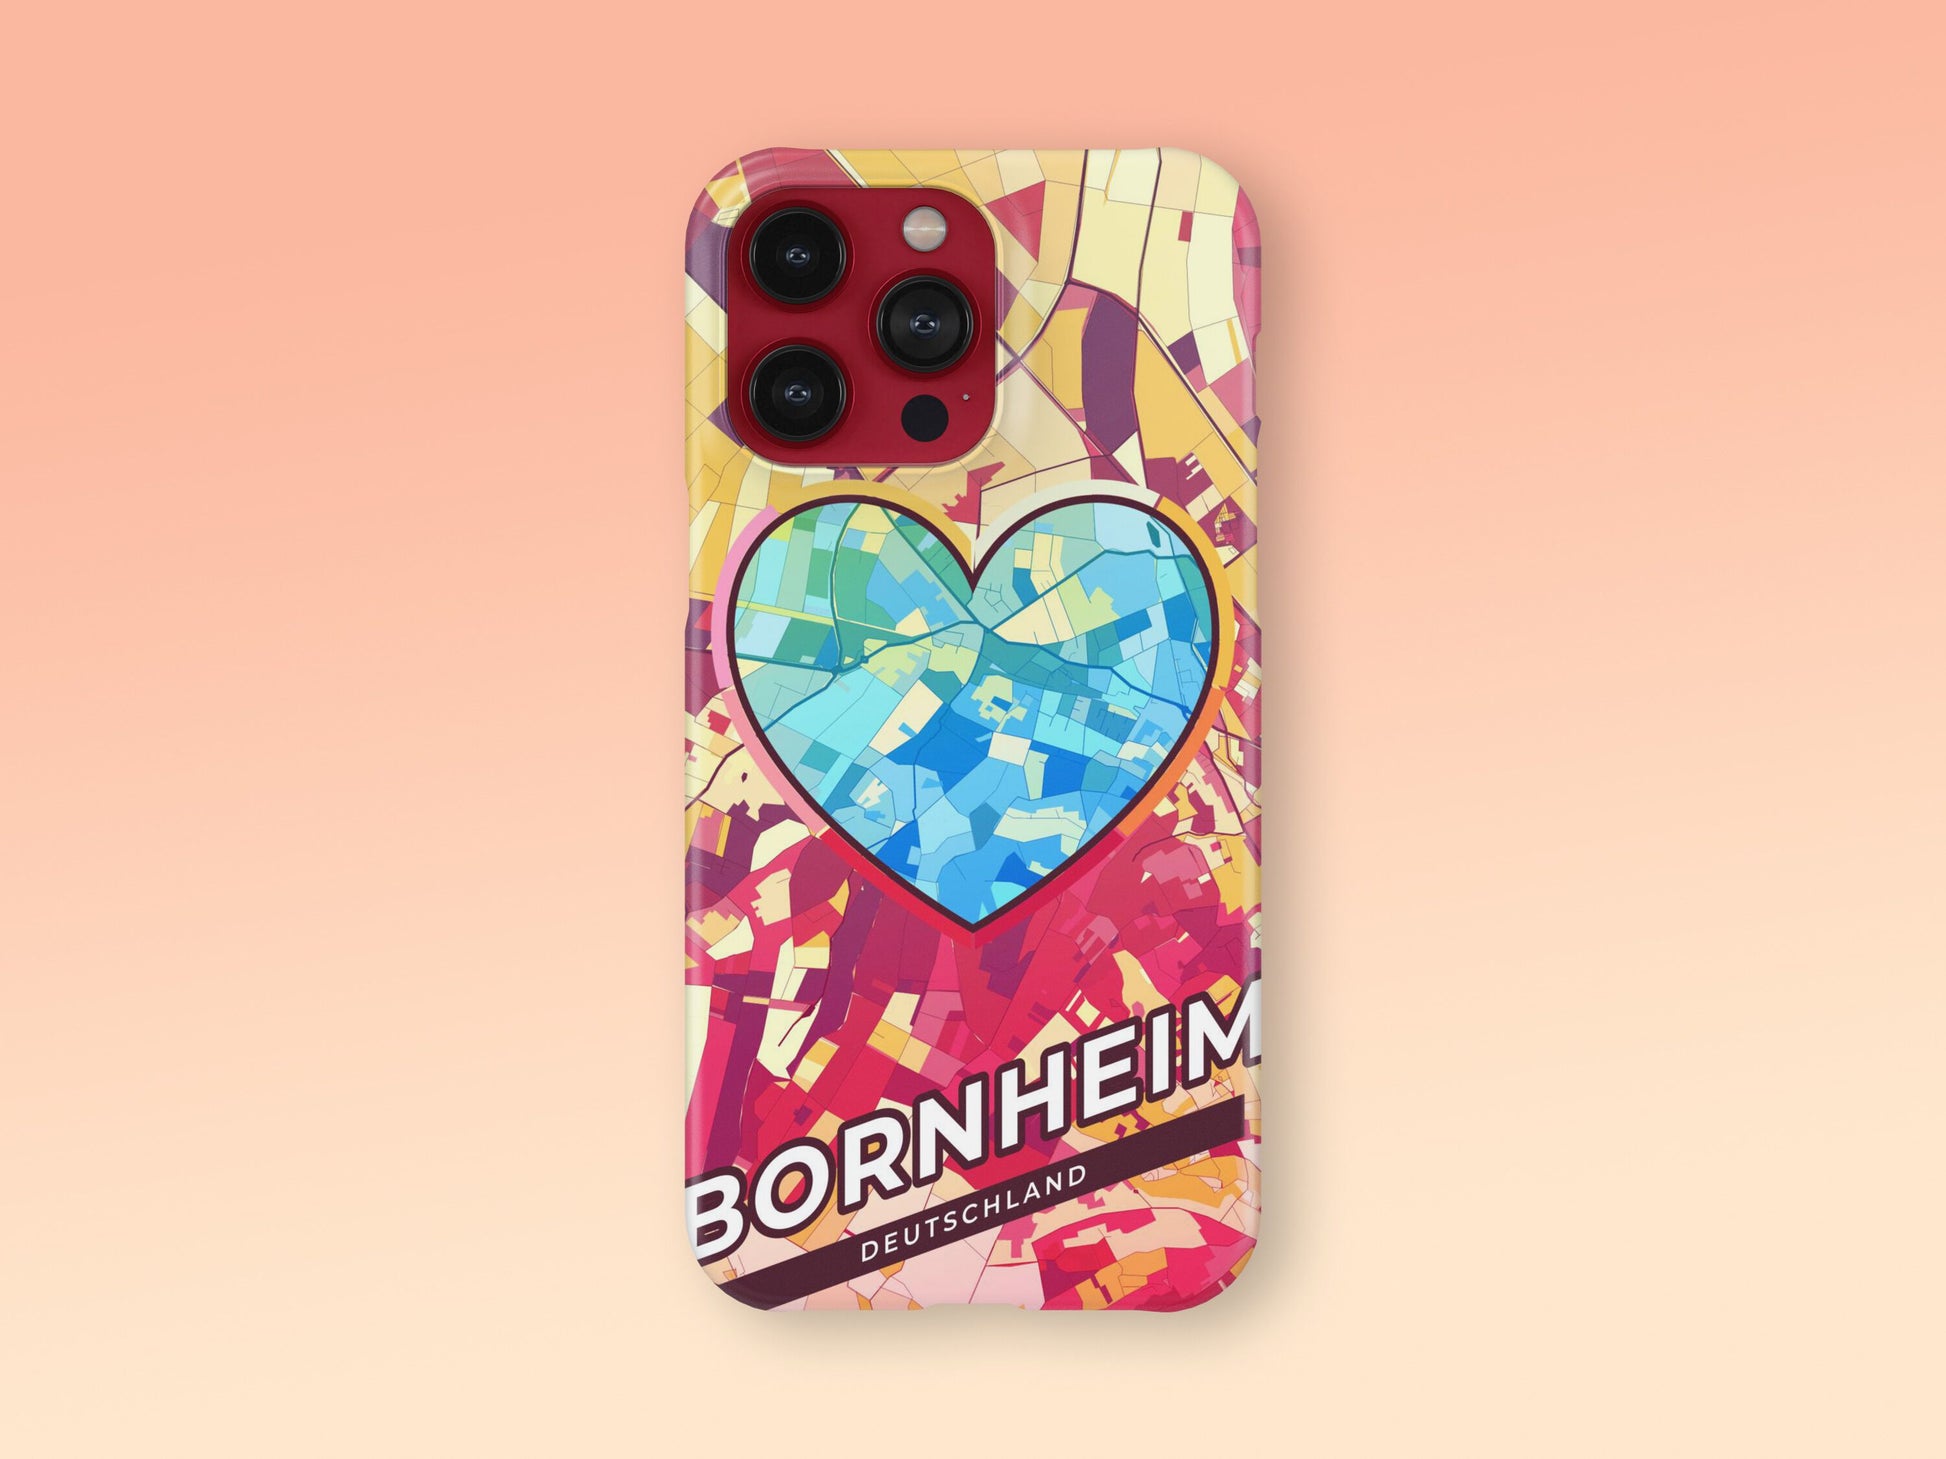 Bornheim Deutschland slim phone case with colorful icon. Birthday, wedding or housewarming gift. Couple match cases. 2